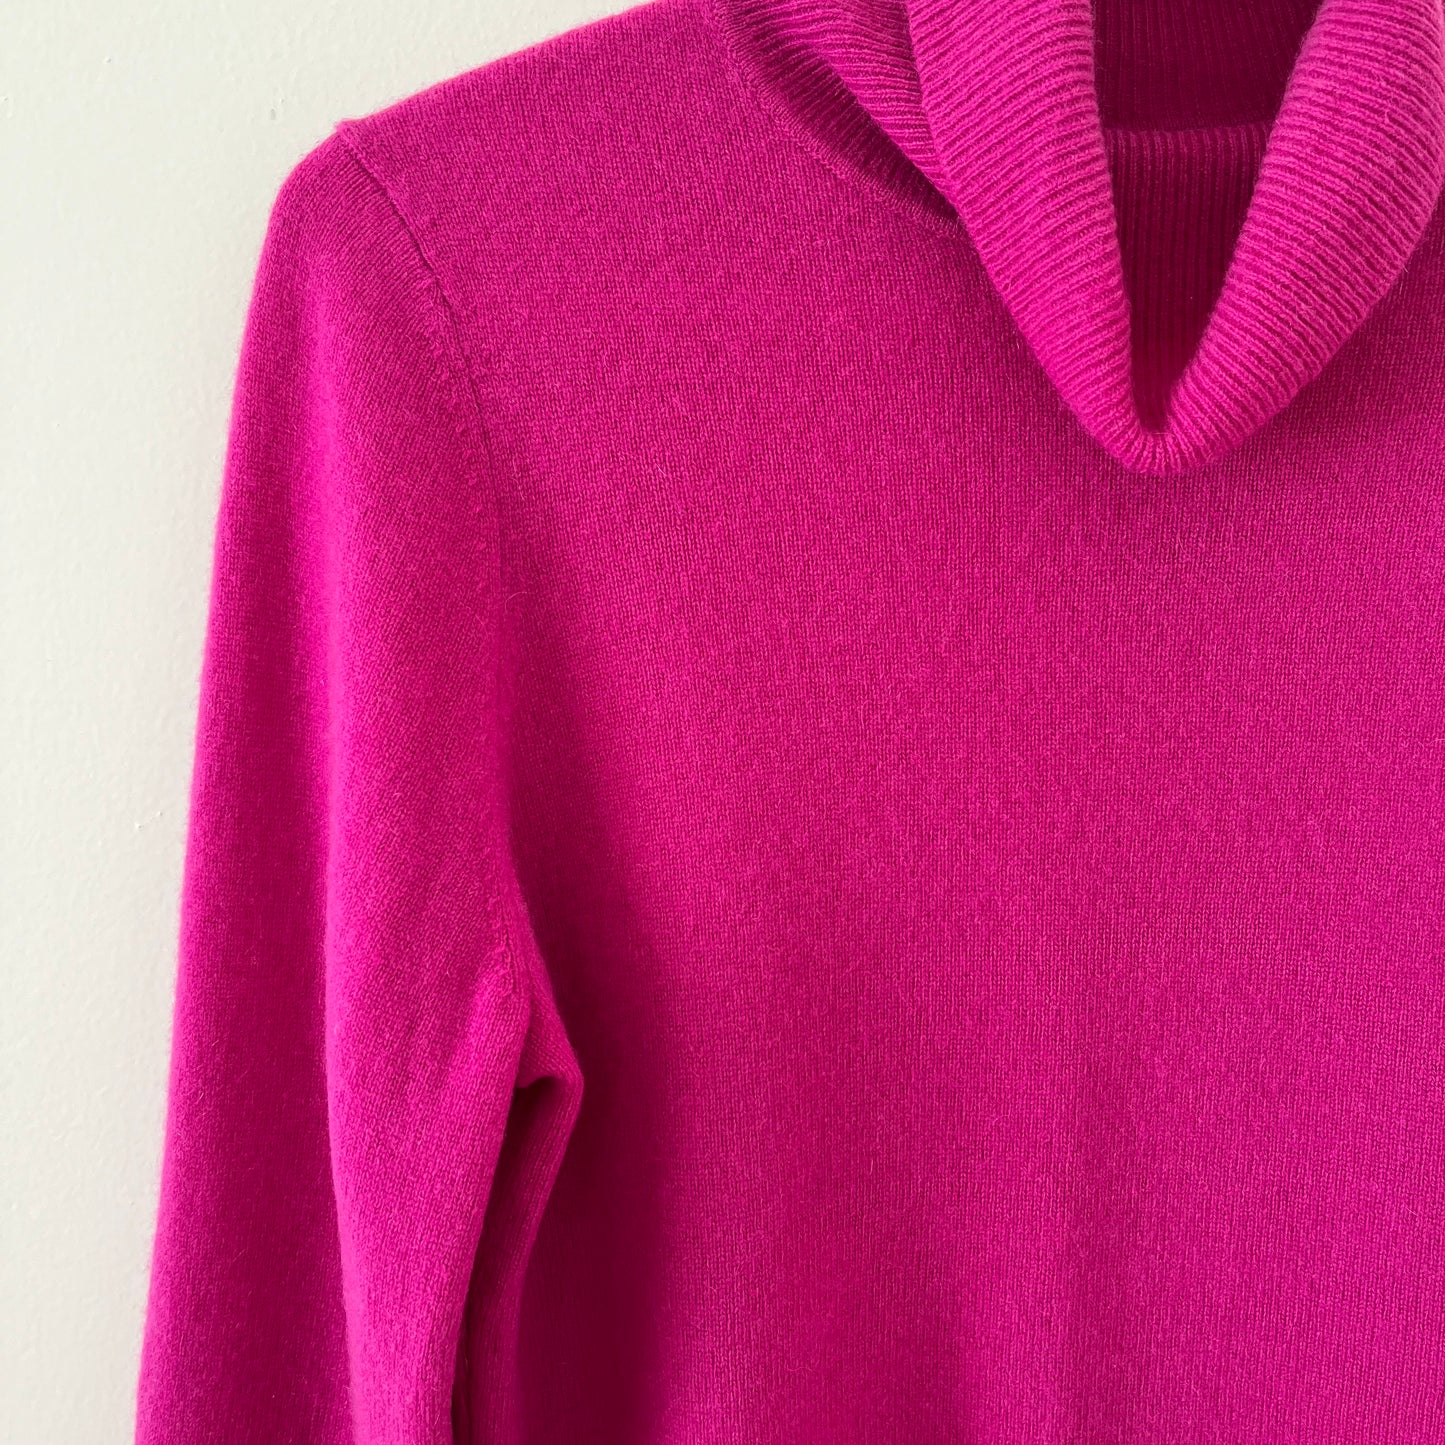 Fuschia Cashmere Sweater (S-M Petite)